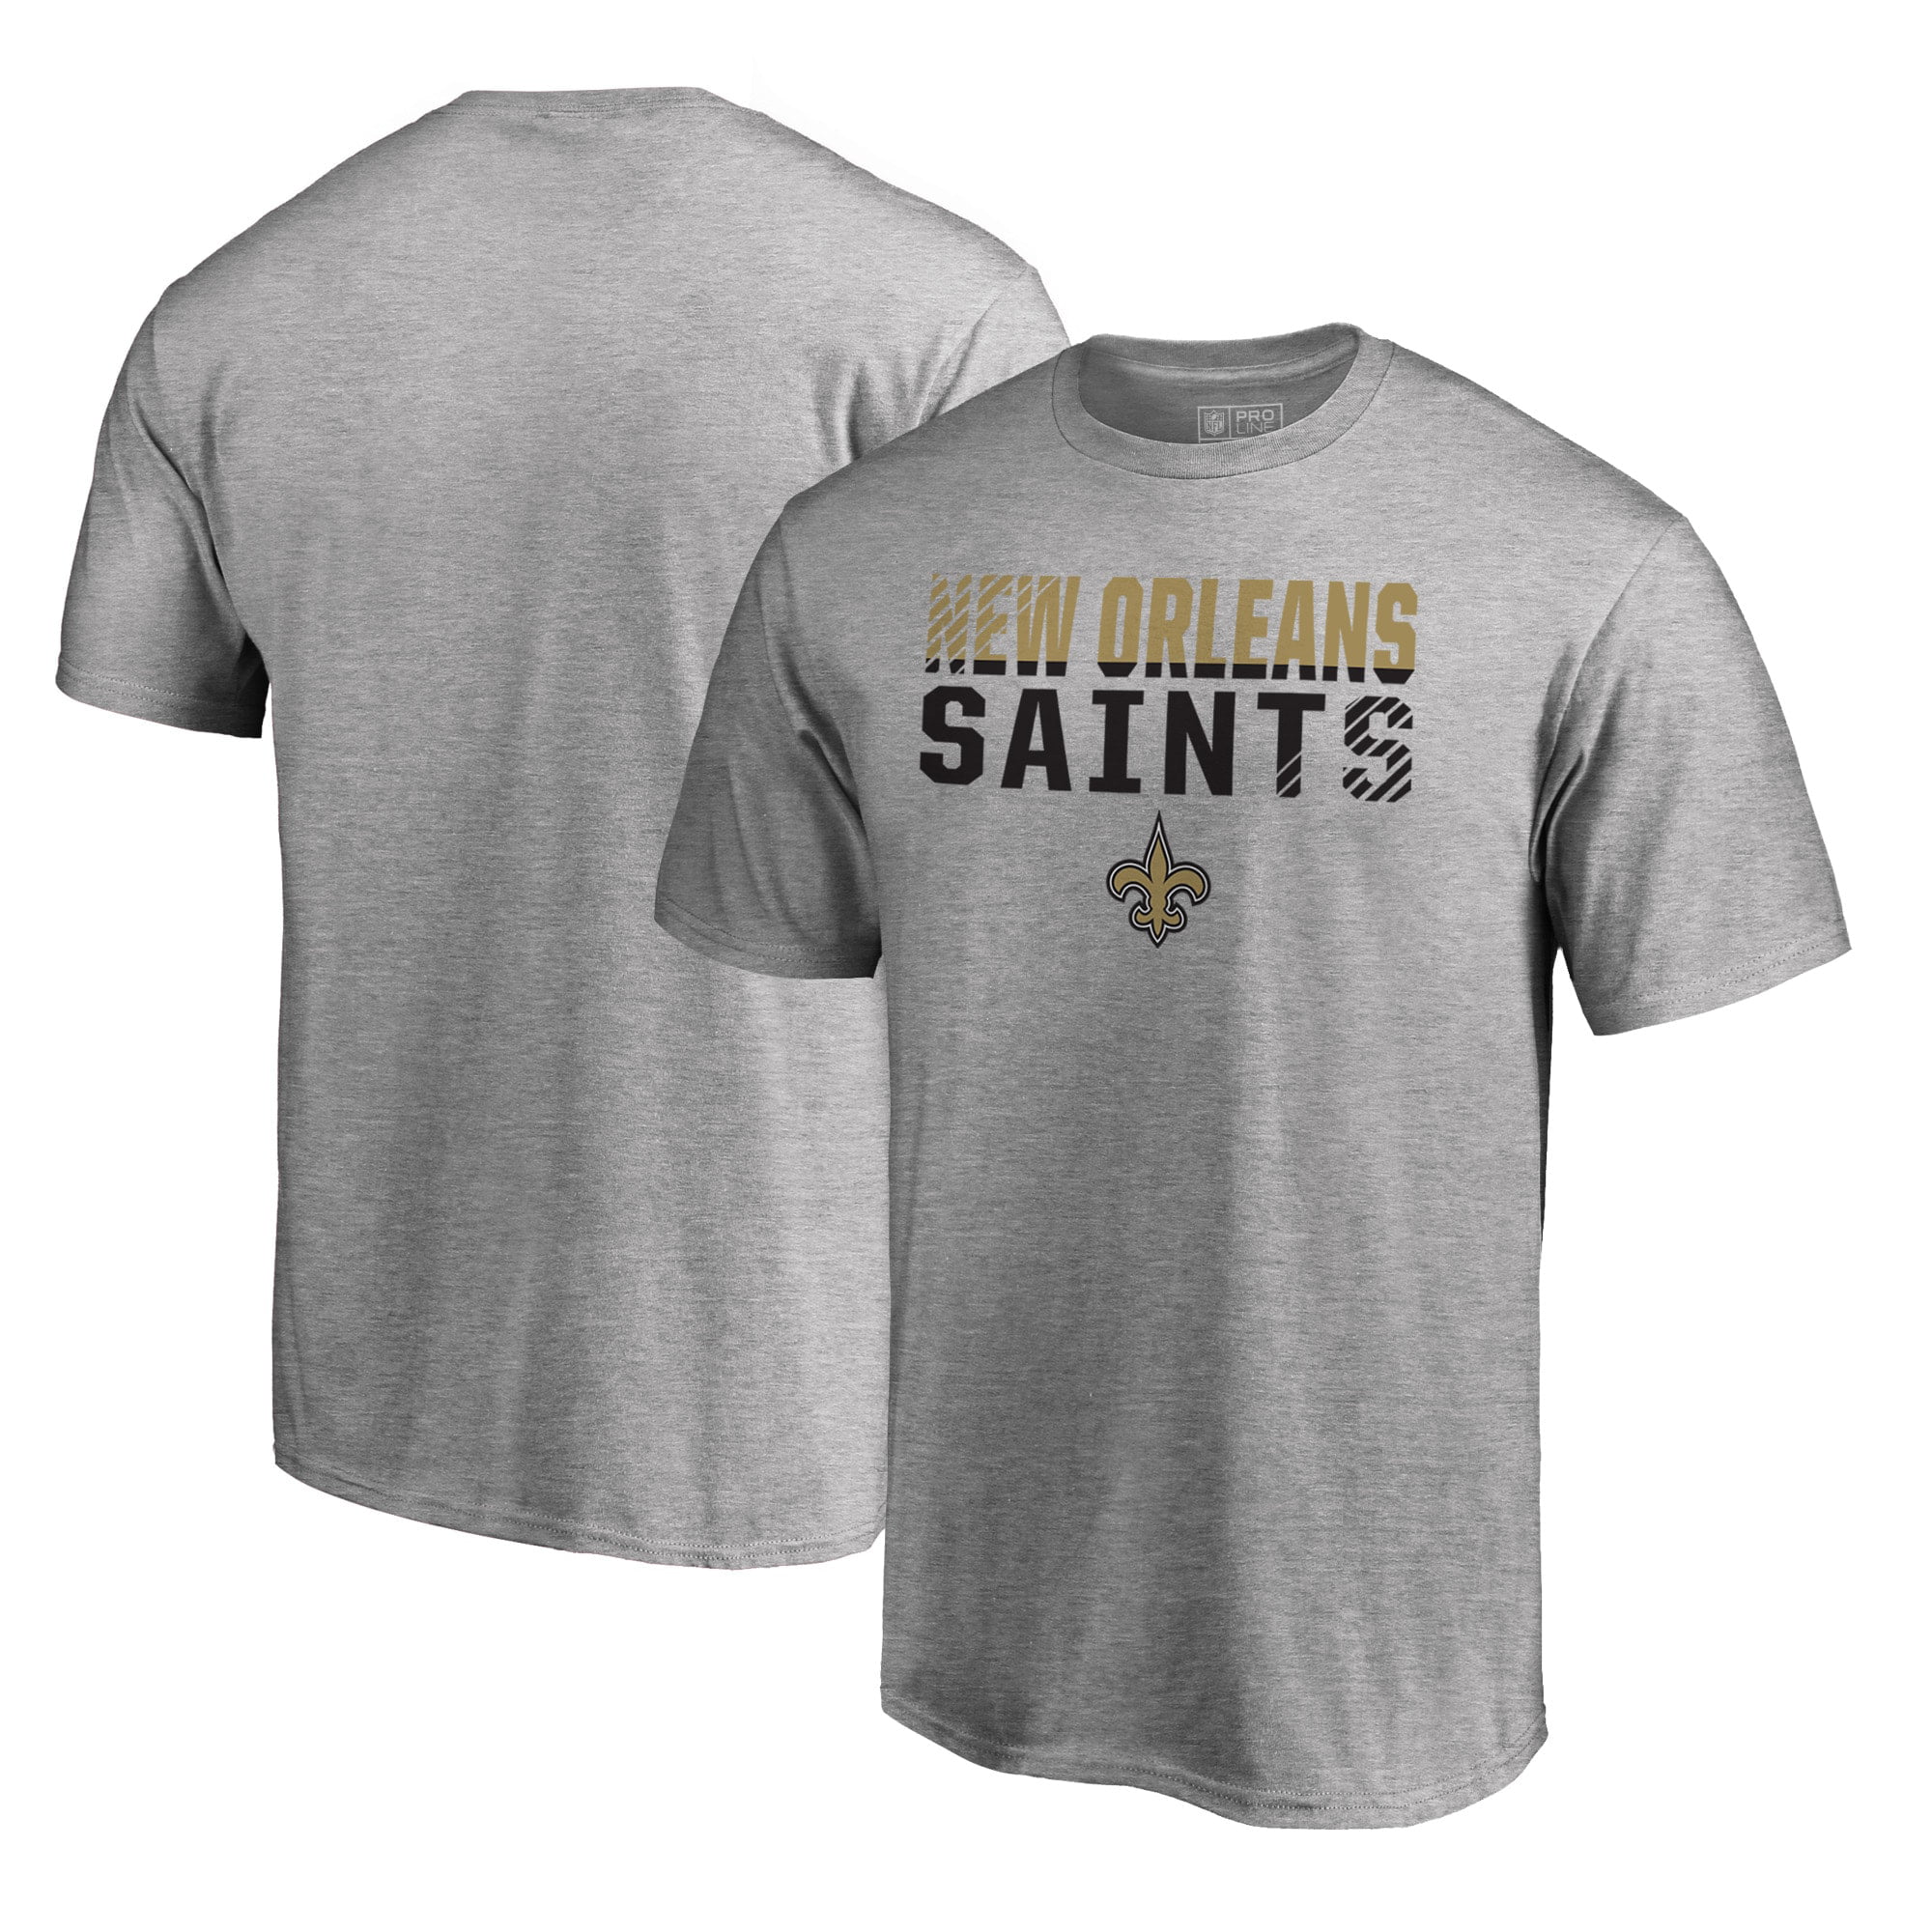 nola saints shirts